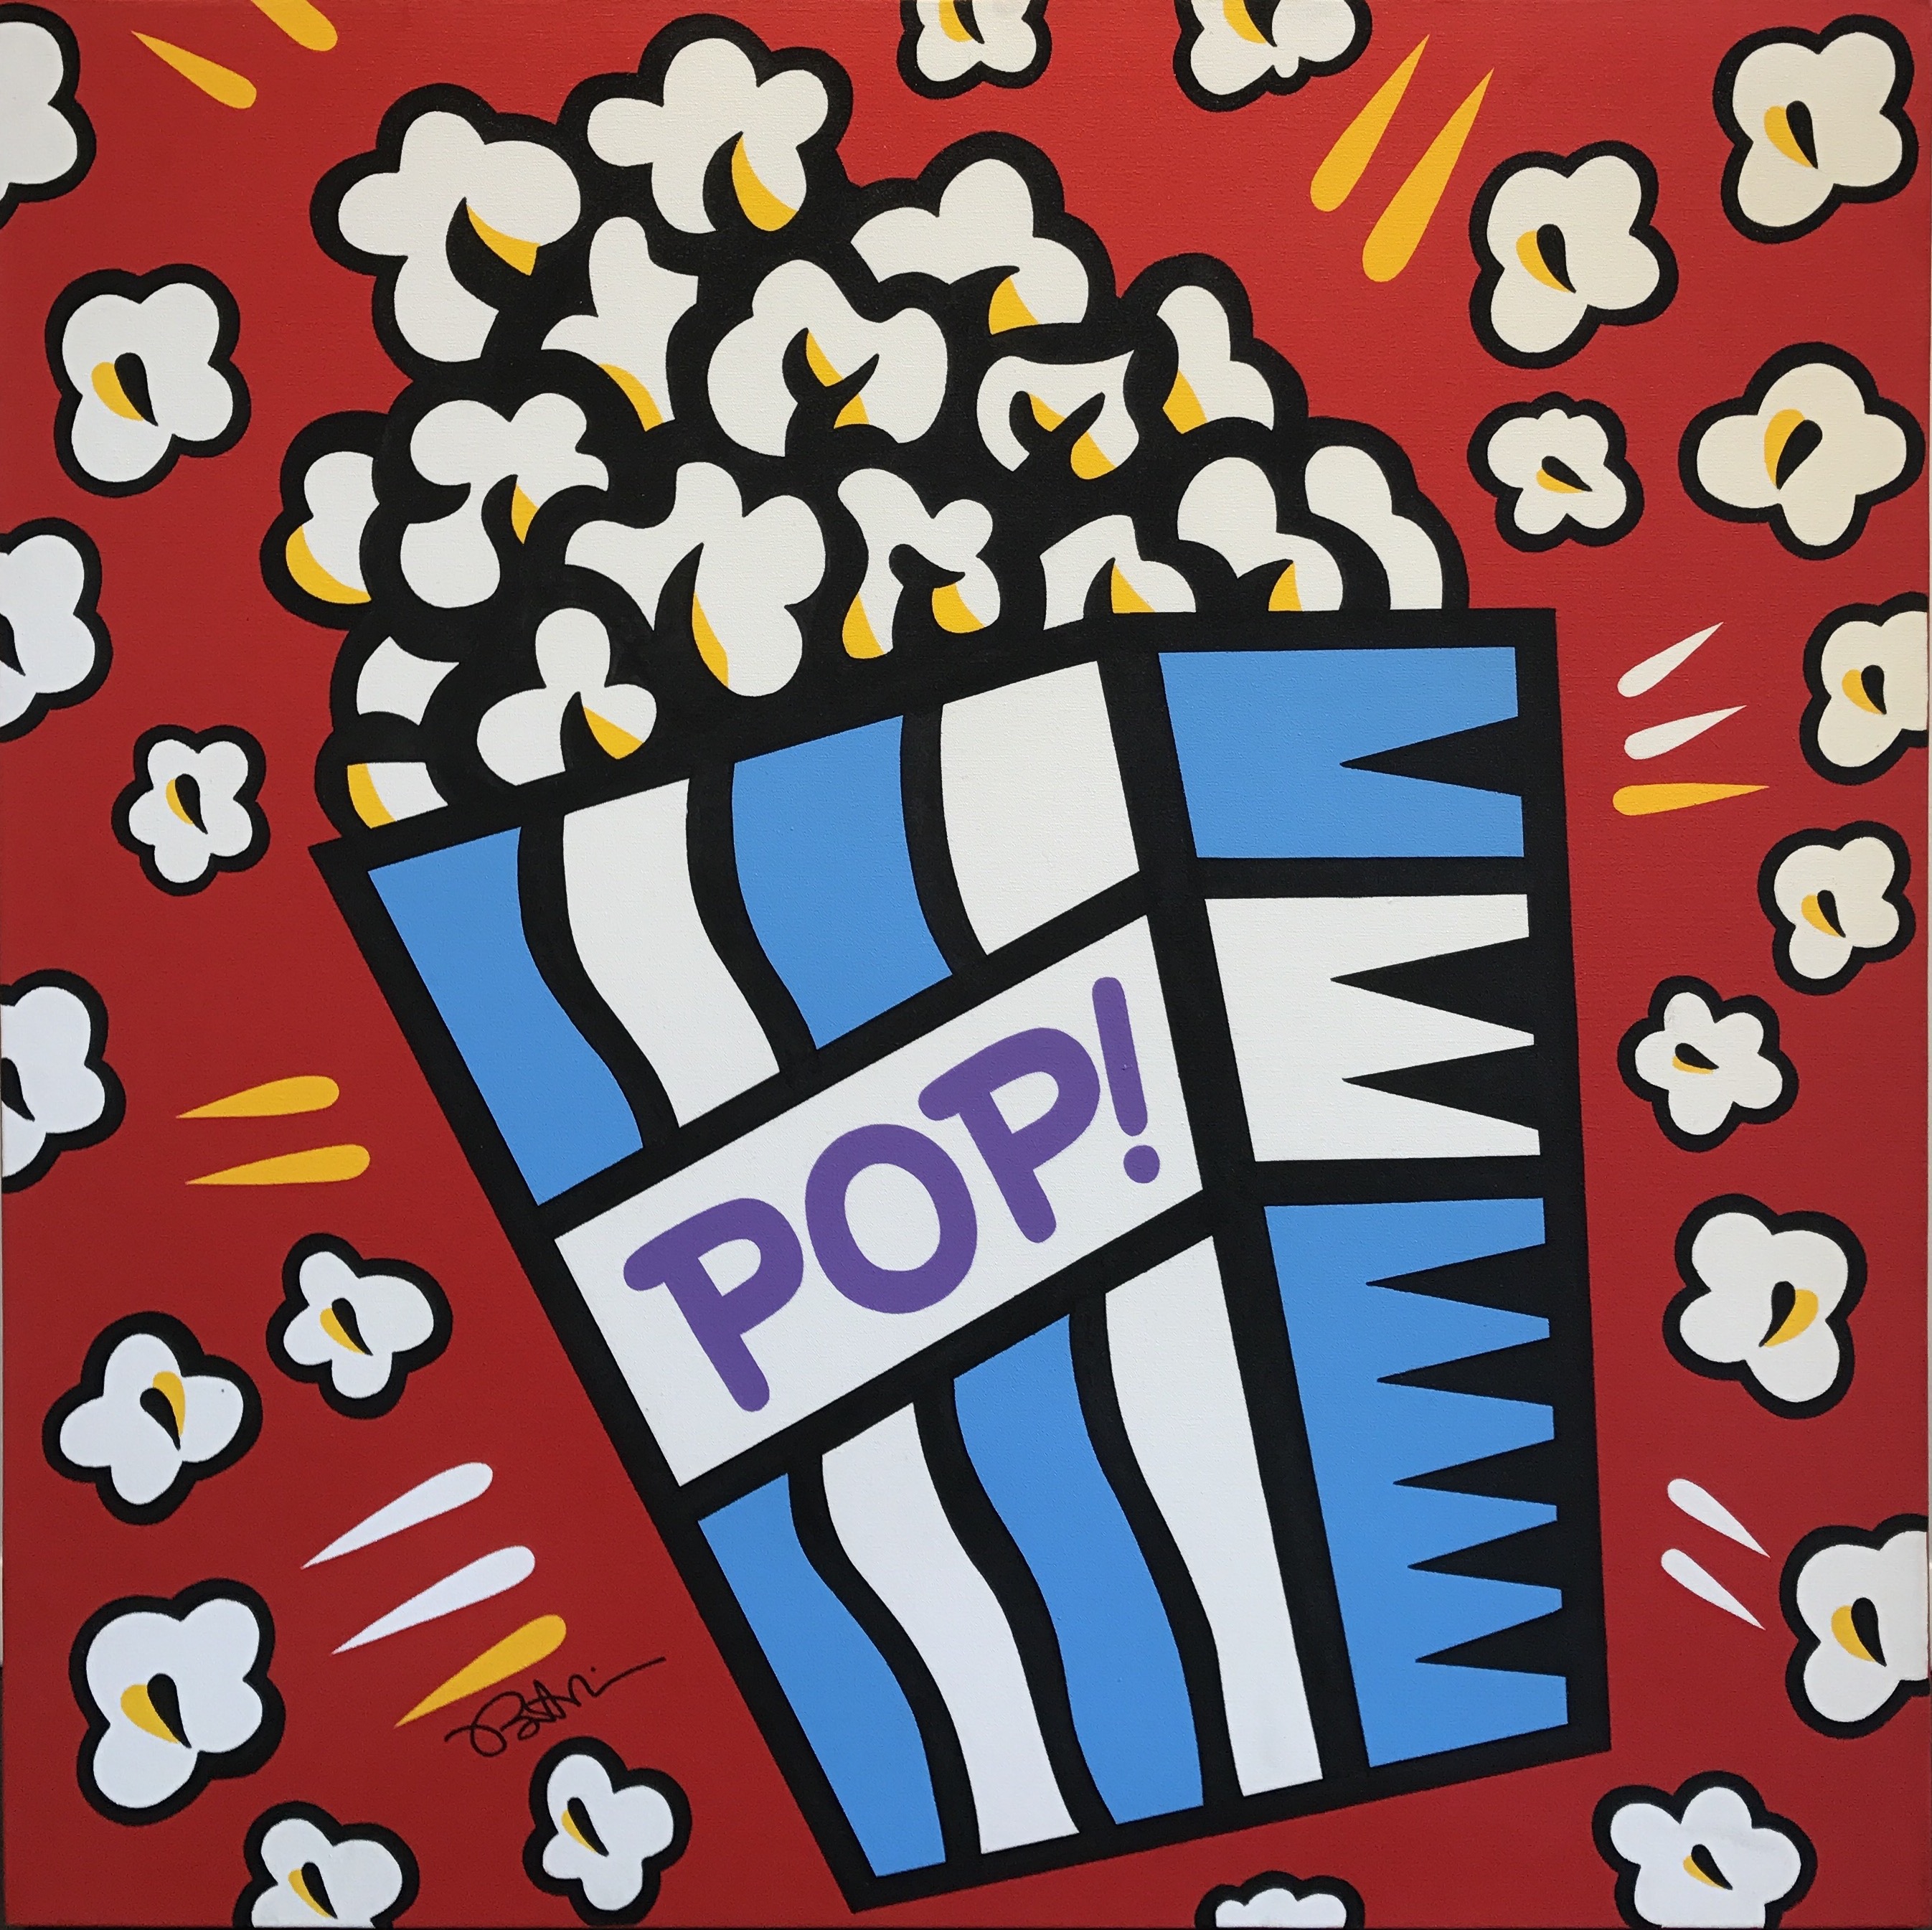 Pop! 2015 by Burton Morris - Denis Bloch Art